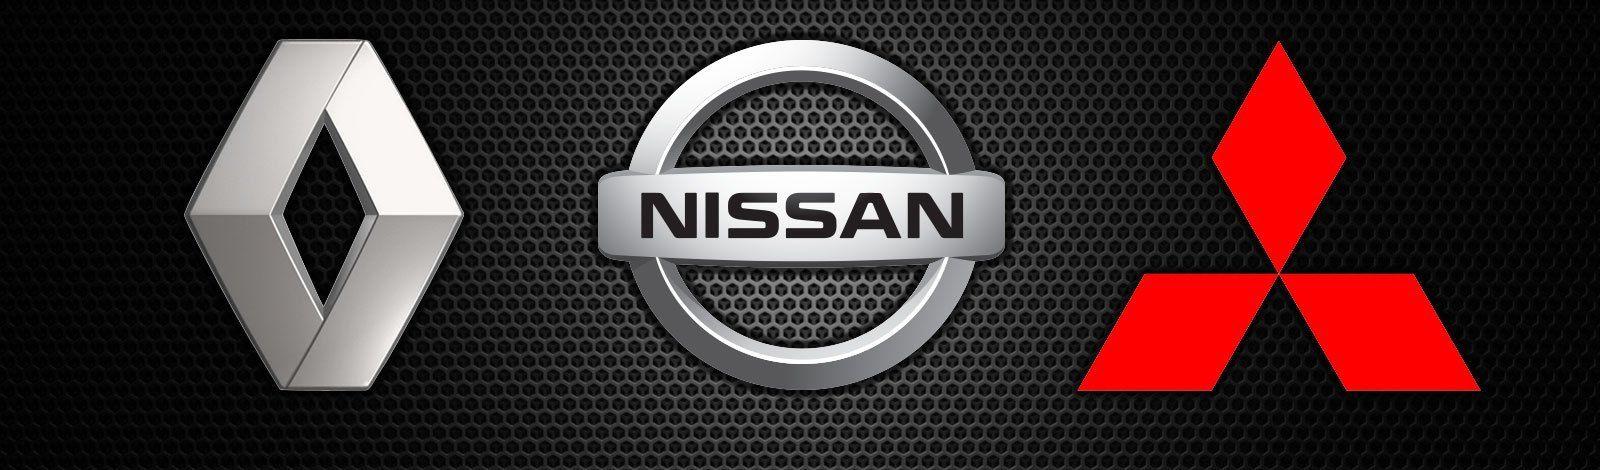 Renault-Nissan Mitsubishi Logo - ON THE ROAD- RENAULT-NISSAN-MITSUBISHI SELLS 10.6 MILLION VEHICLES ...